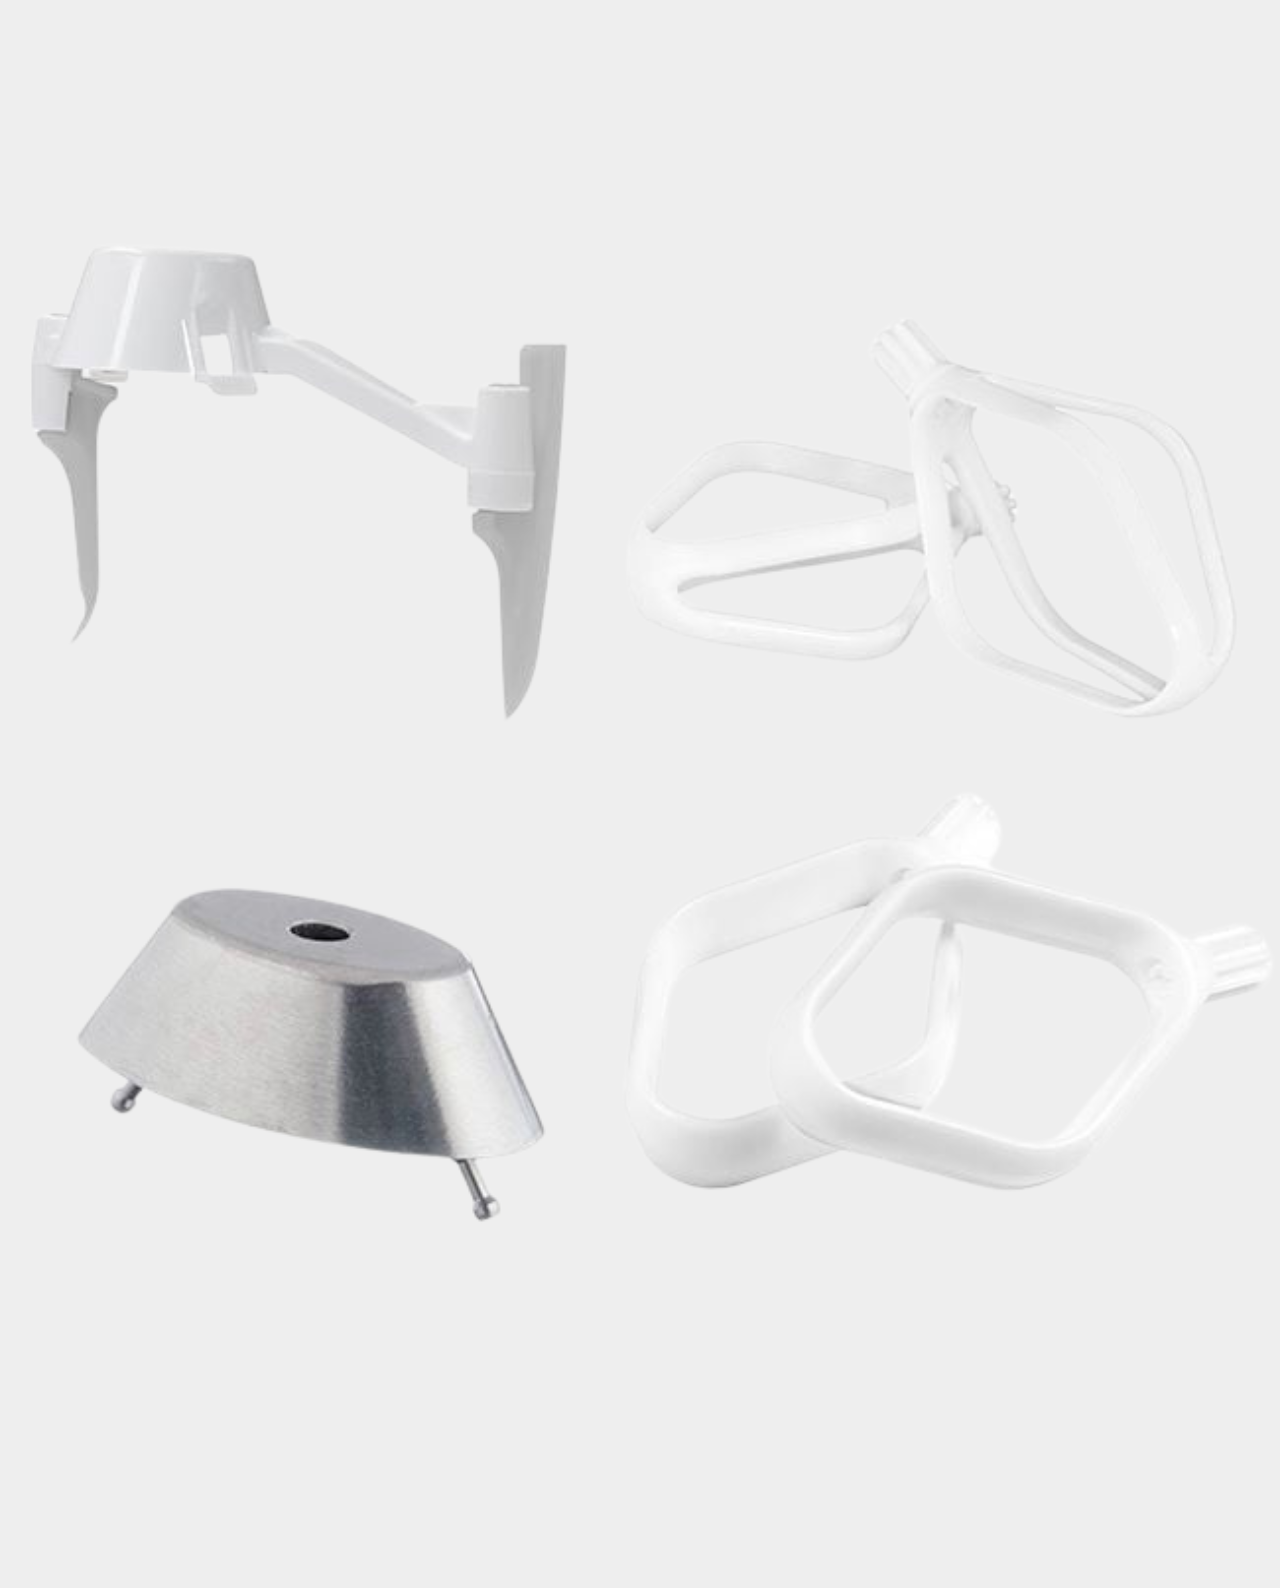 Bosch Universal Plus Mixer — White – Breadtopia